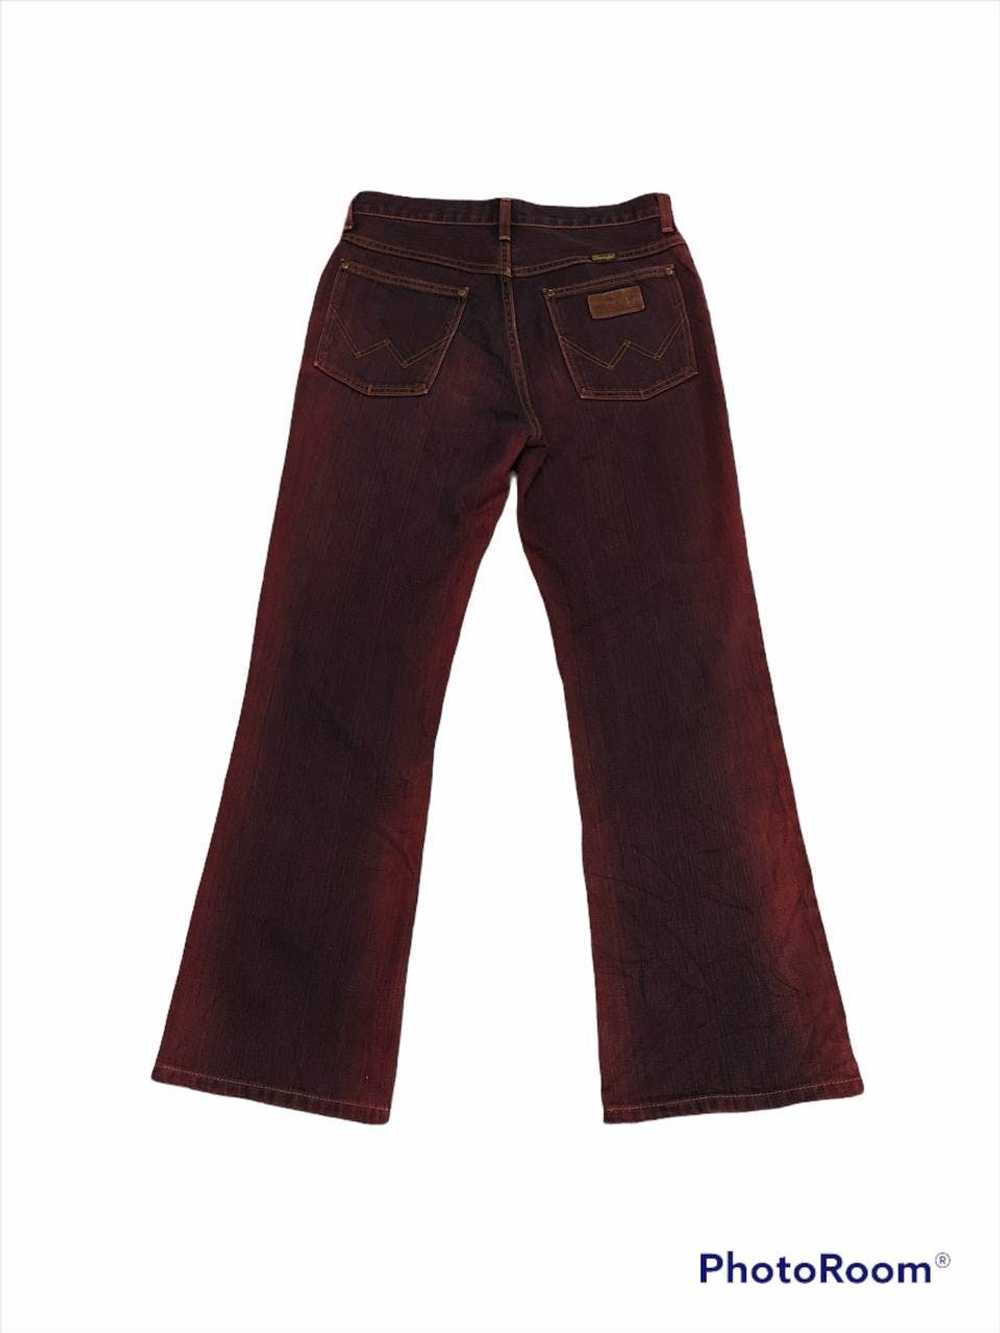 Vintage Wrangler Faded Marron Denim Pants - image 5